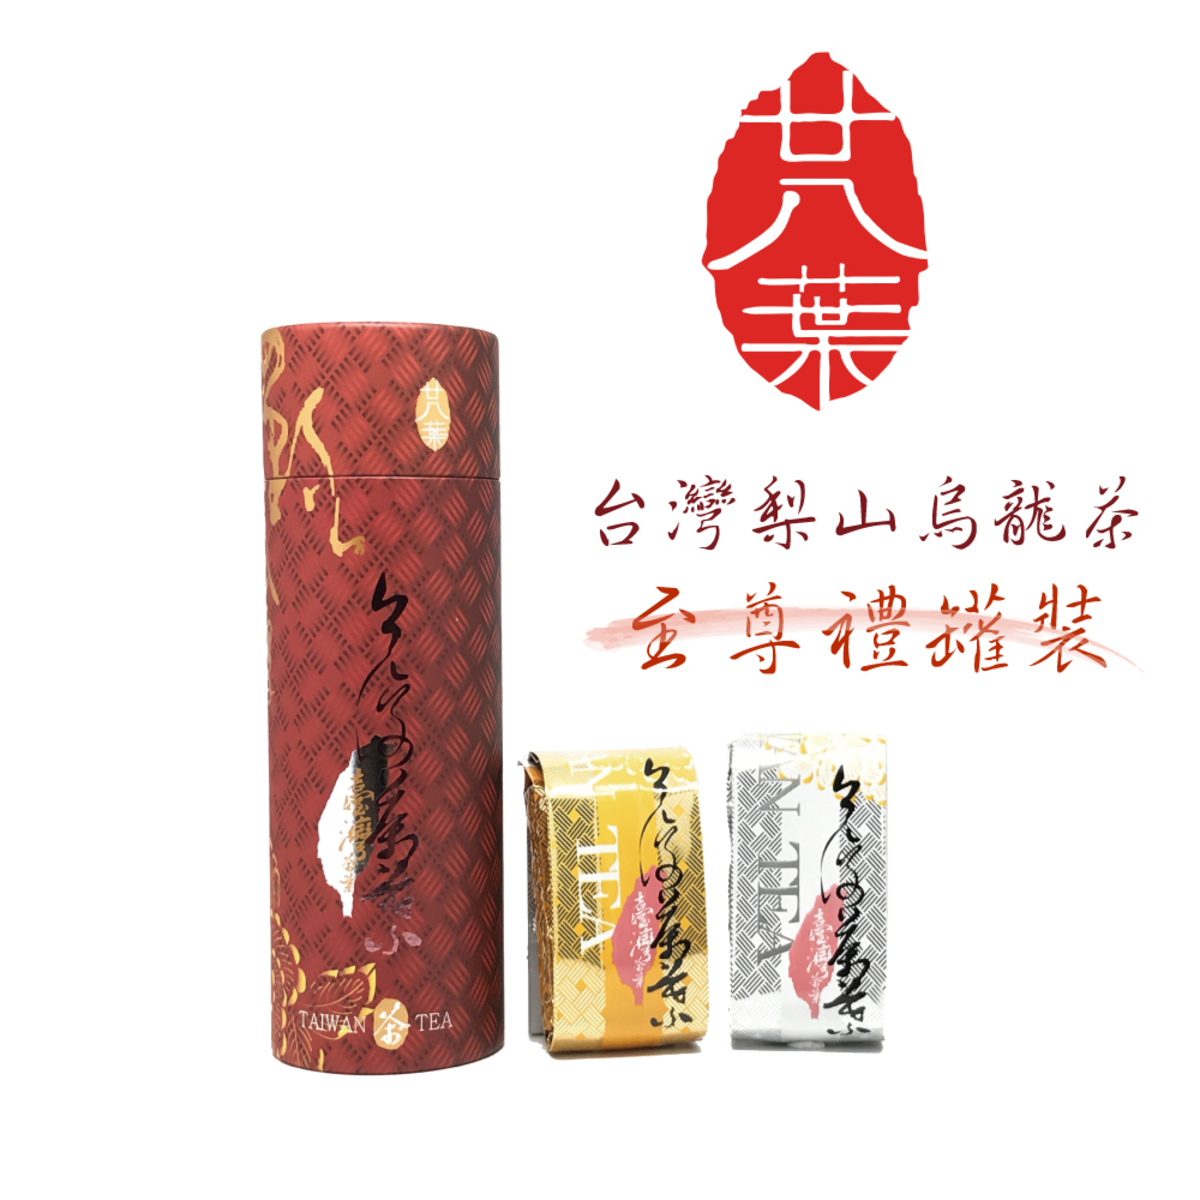 Taiwan Lishan Oolong Tea Supreme tea can box 120g (60g x2)